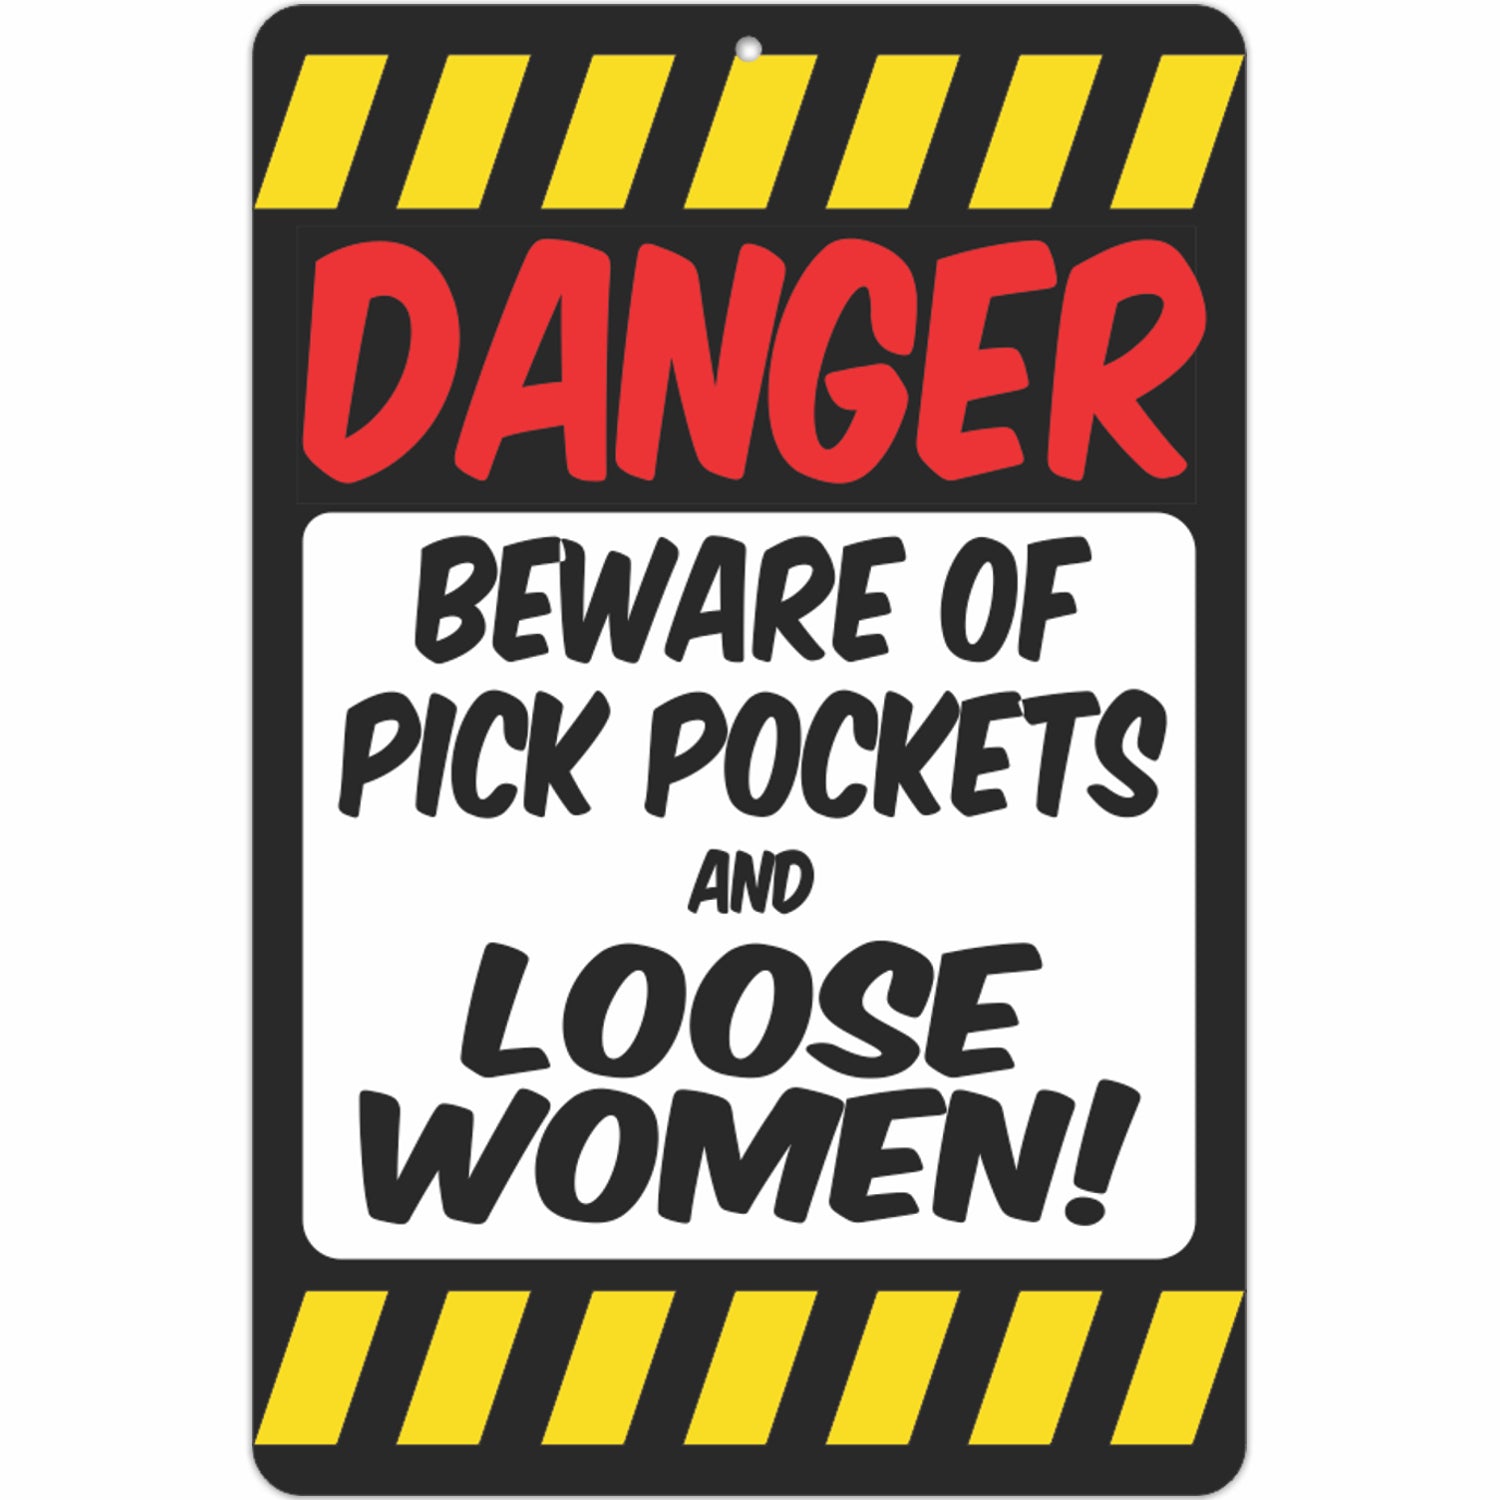 Danger Beware of Pick Pockets and Loose Women!